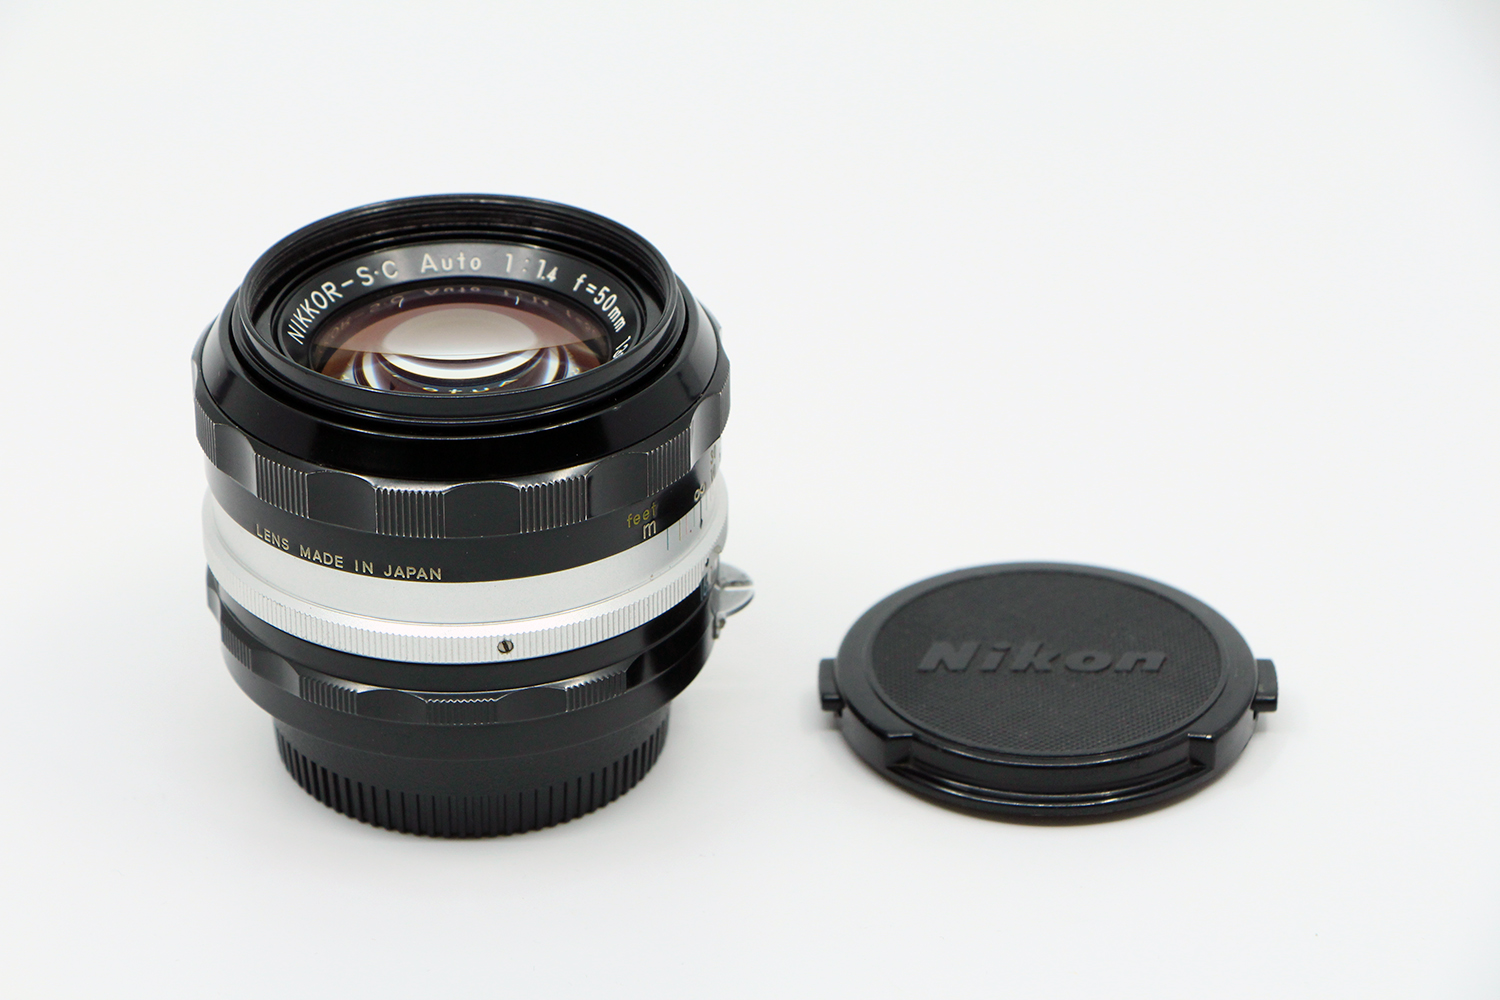 Nikon SC-Auto 50mm F1.4 | IMG_6599.JPG